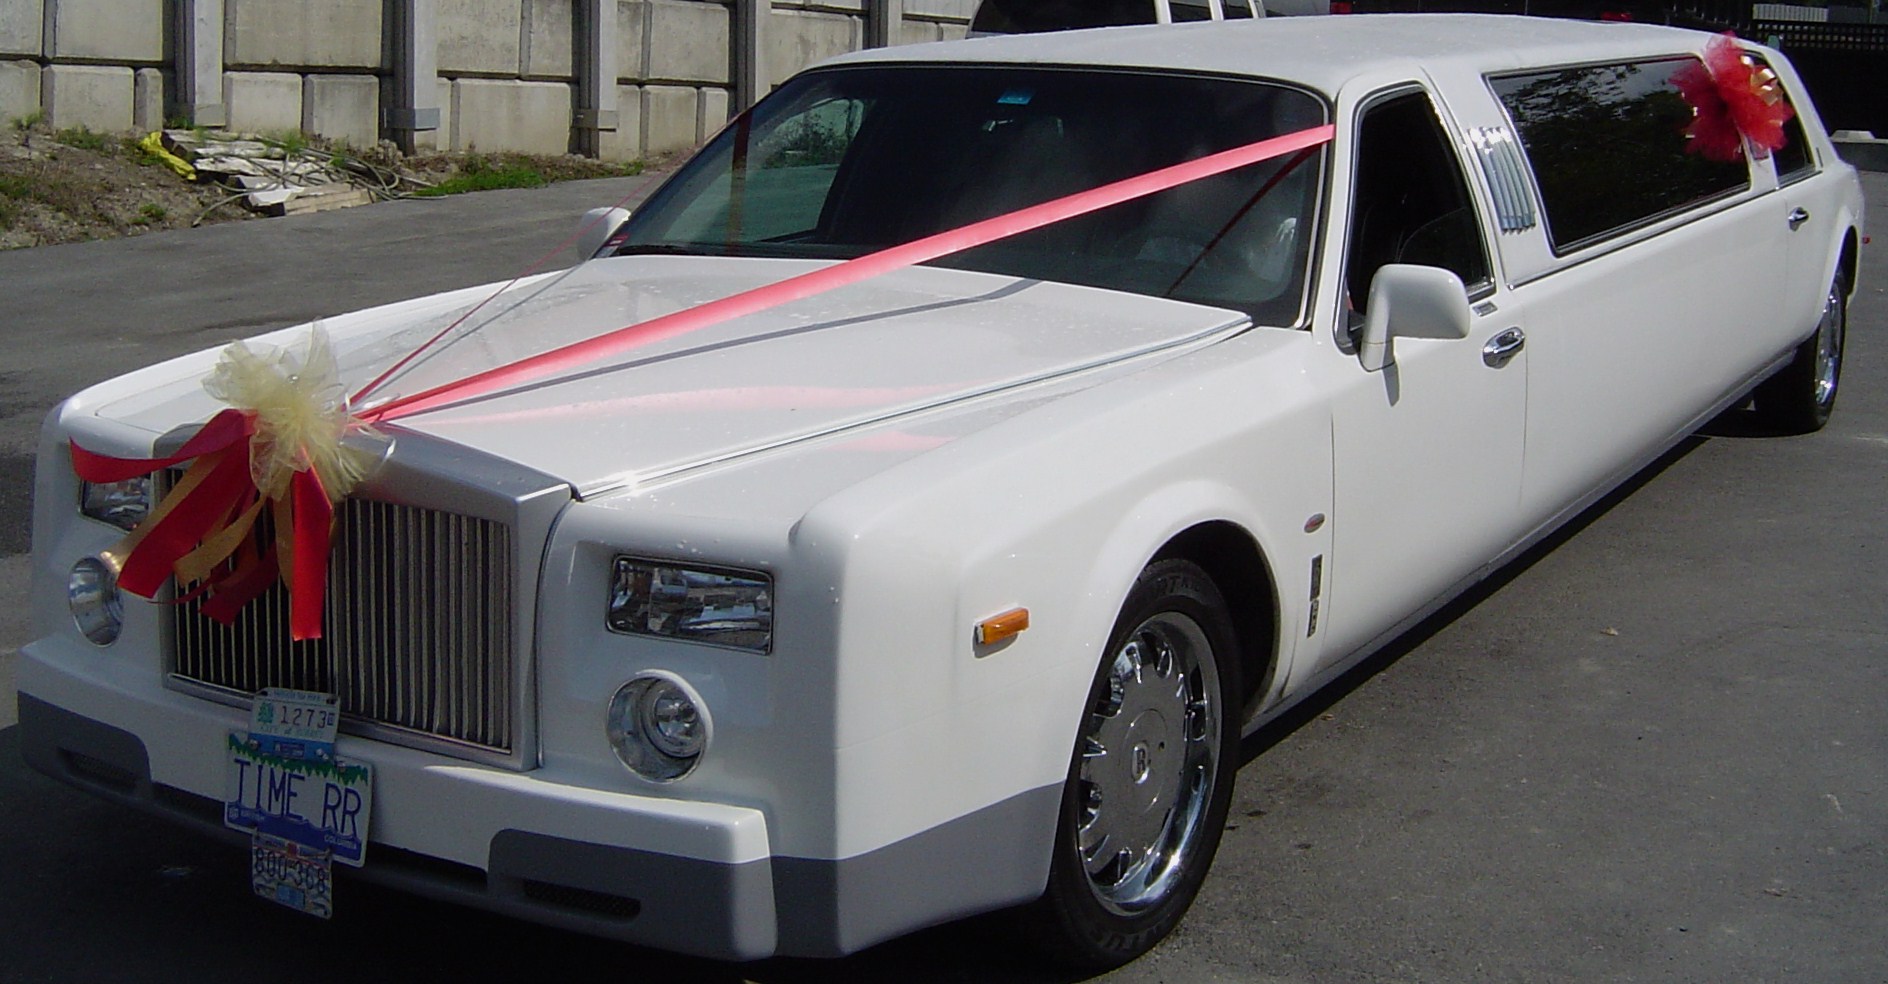 Rolls Royce Phantom Look-a-like Vancouver Limousine